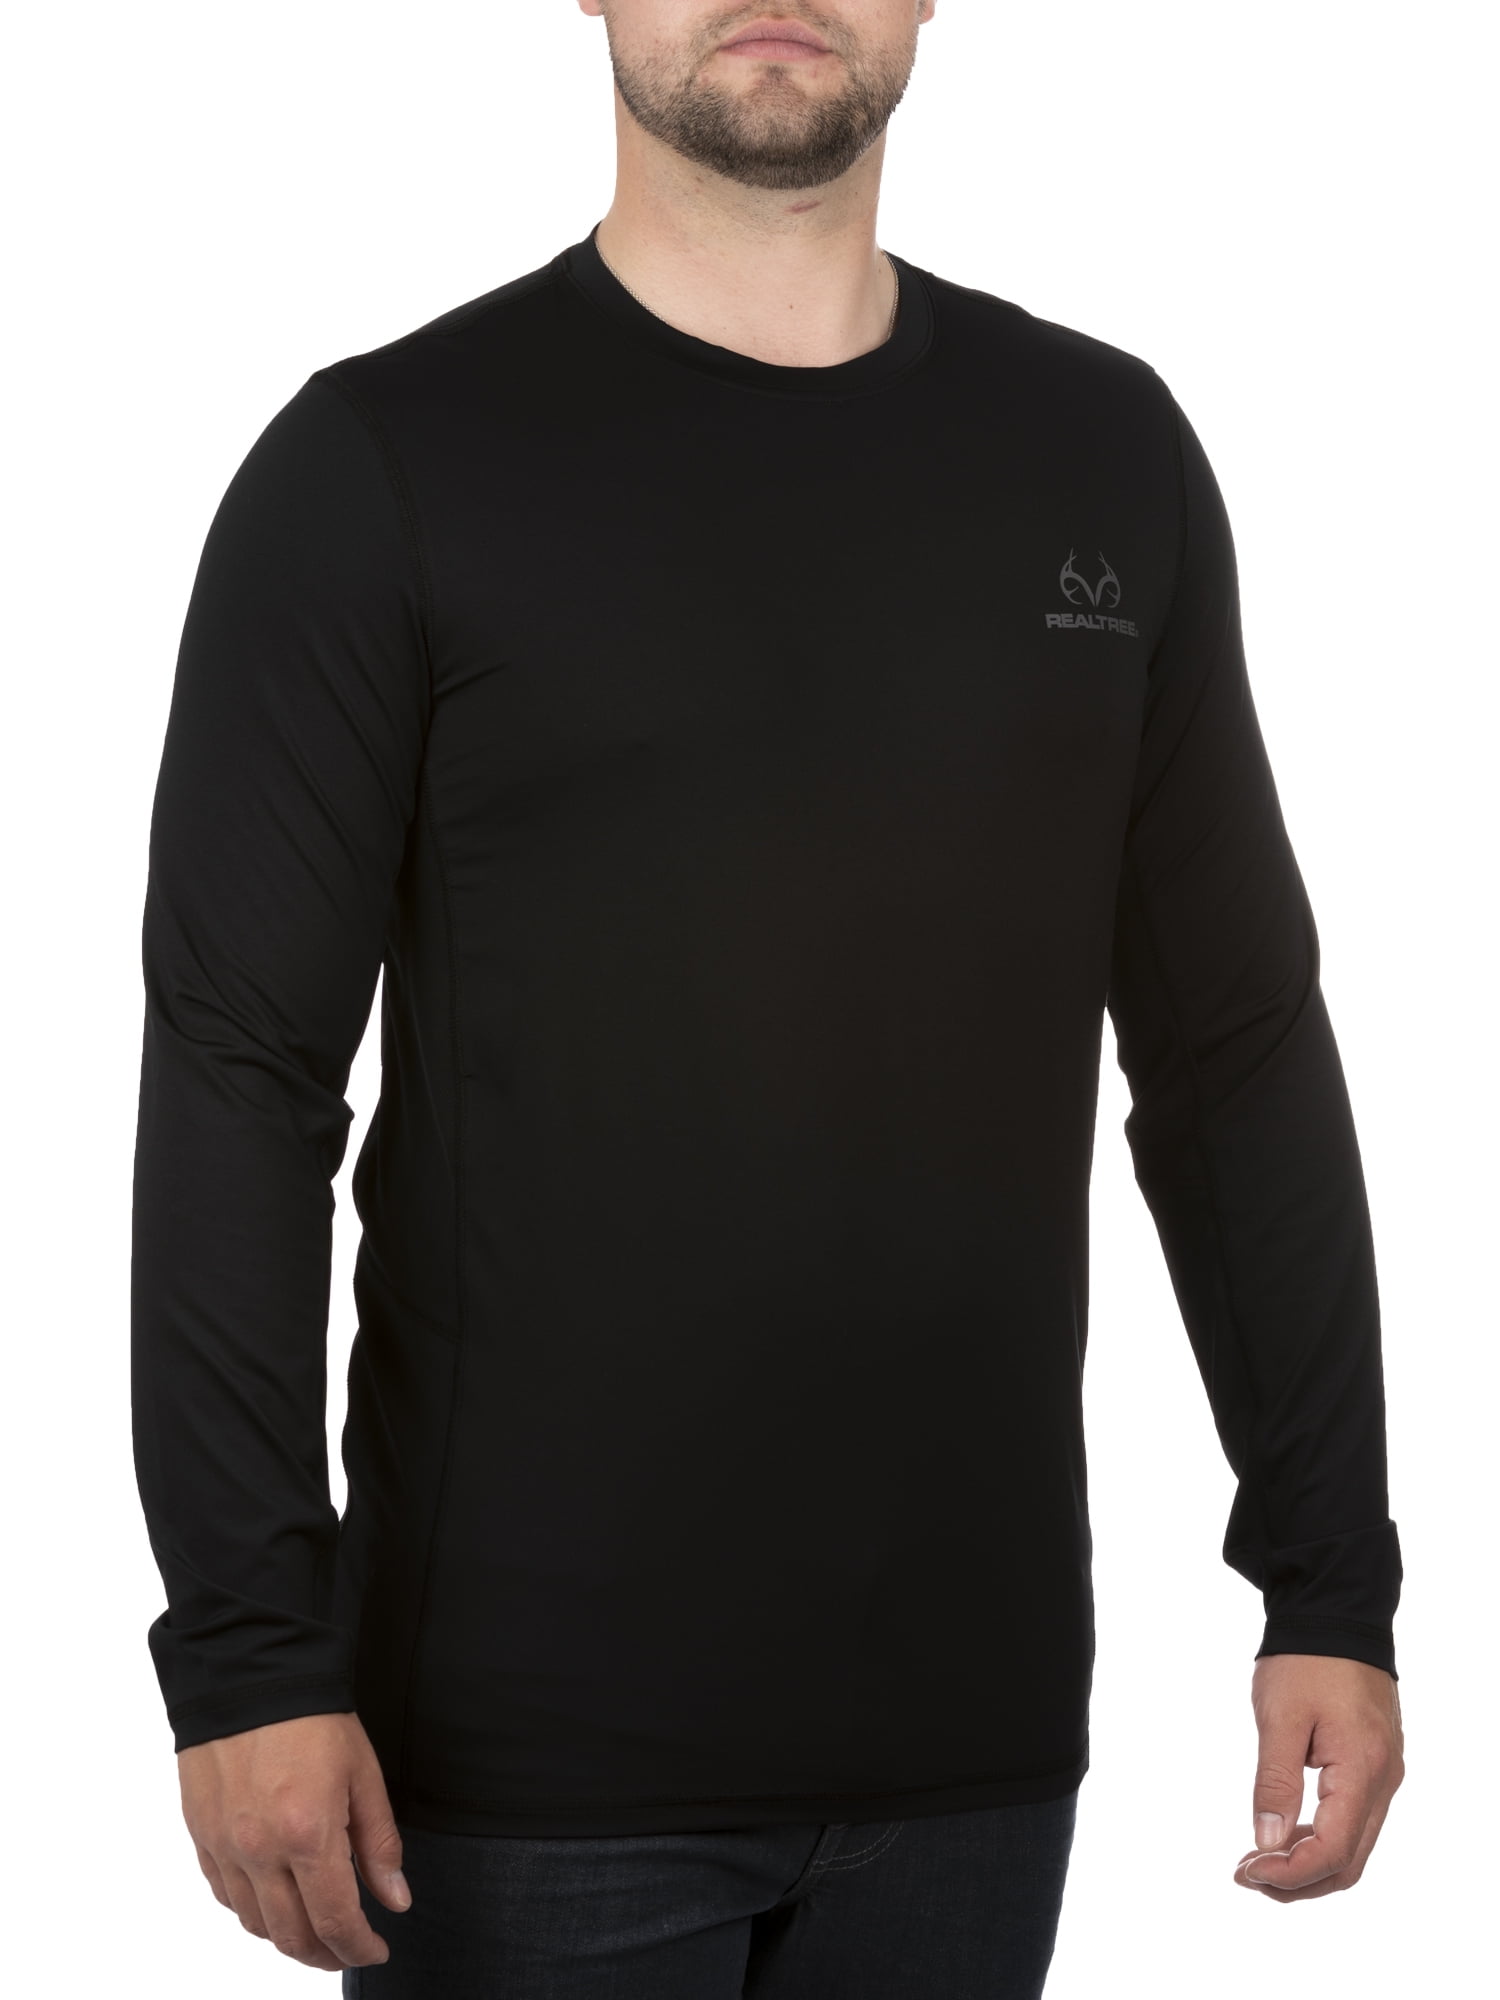 Mens Realtree Outfitters Long-Sleeve Shirt NWT Black 